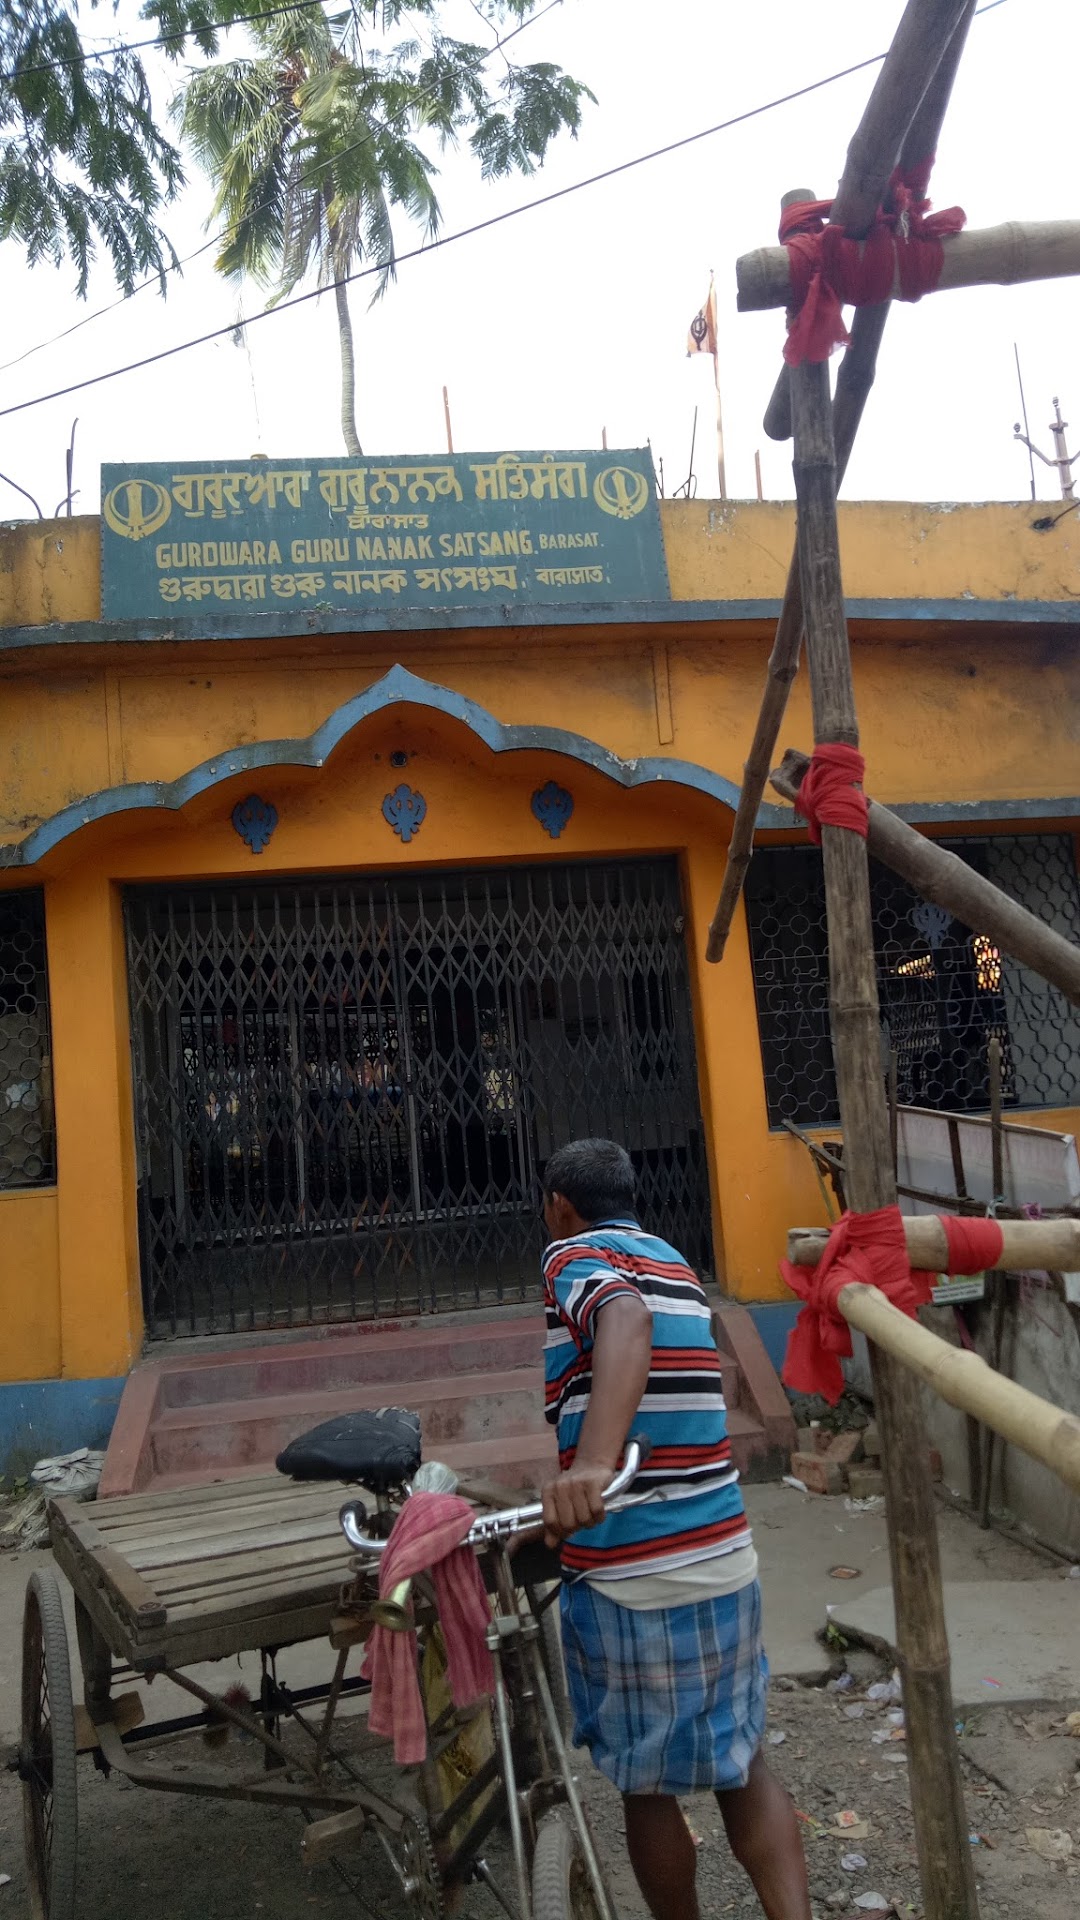 Gurdwara Guru Nanak Satsang